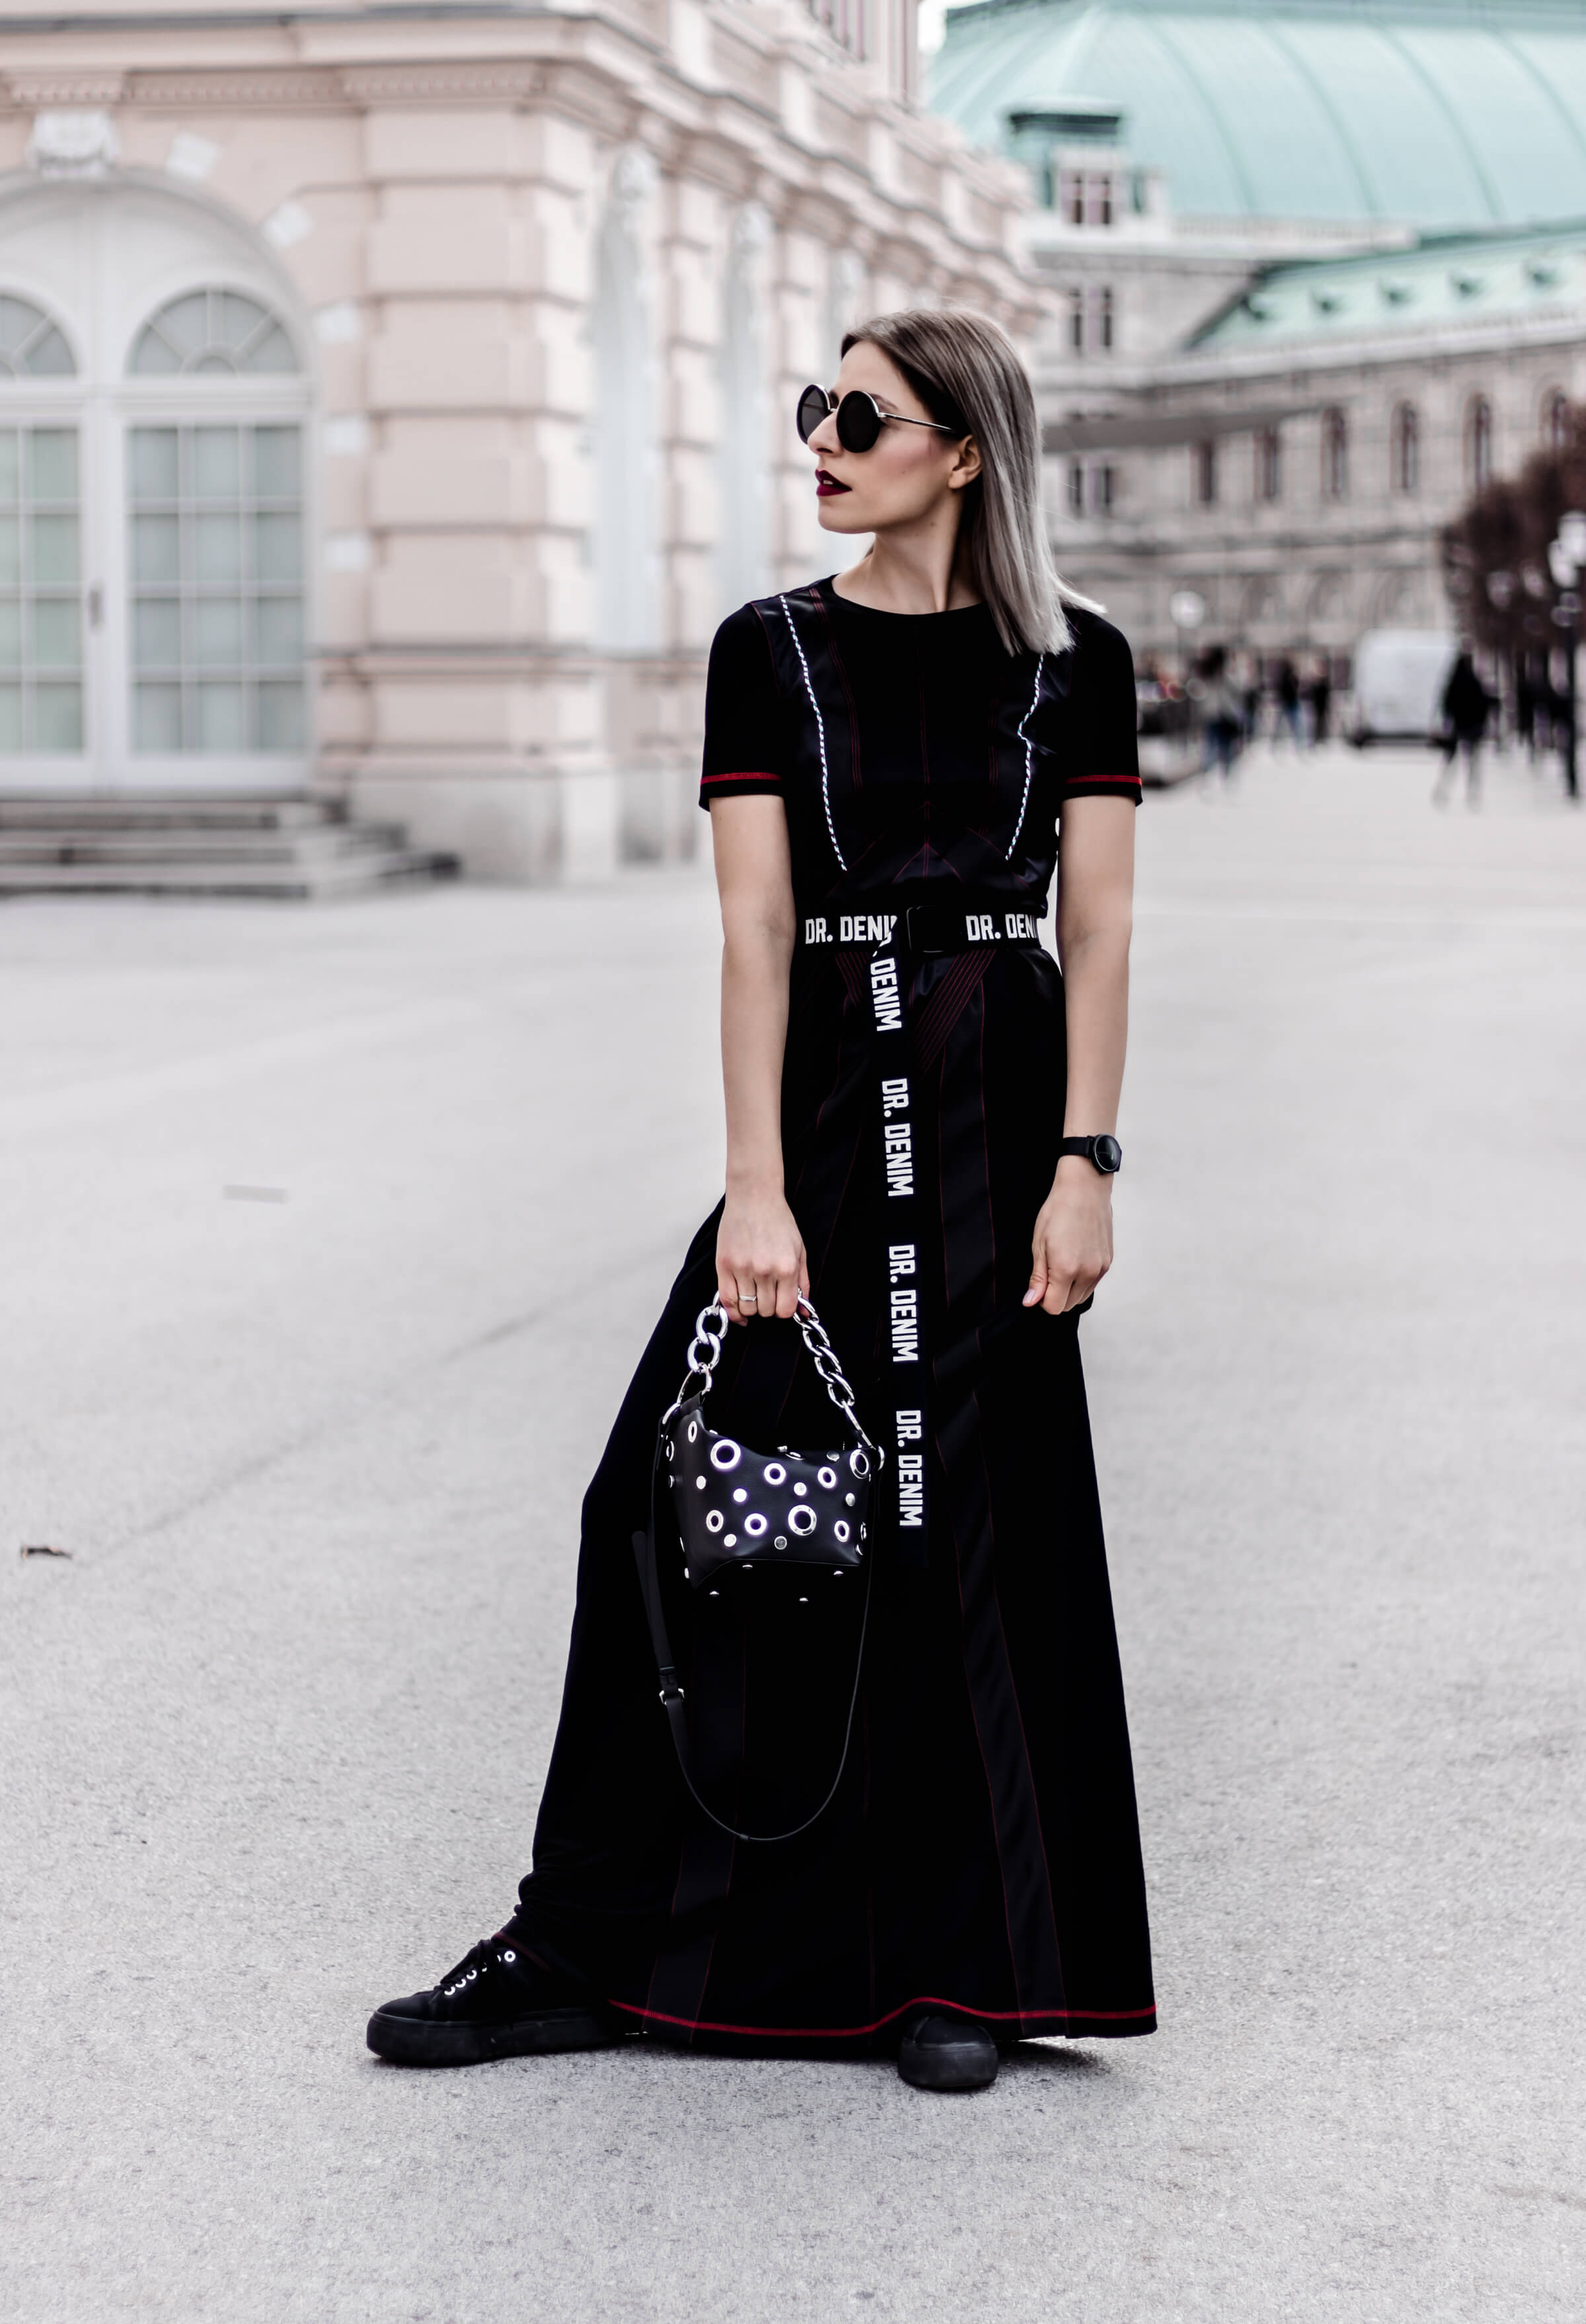 How to Wear a Black Dress